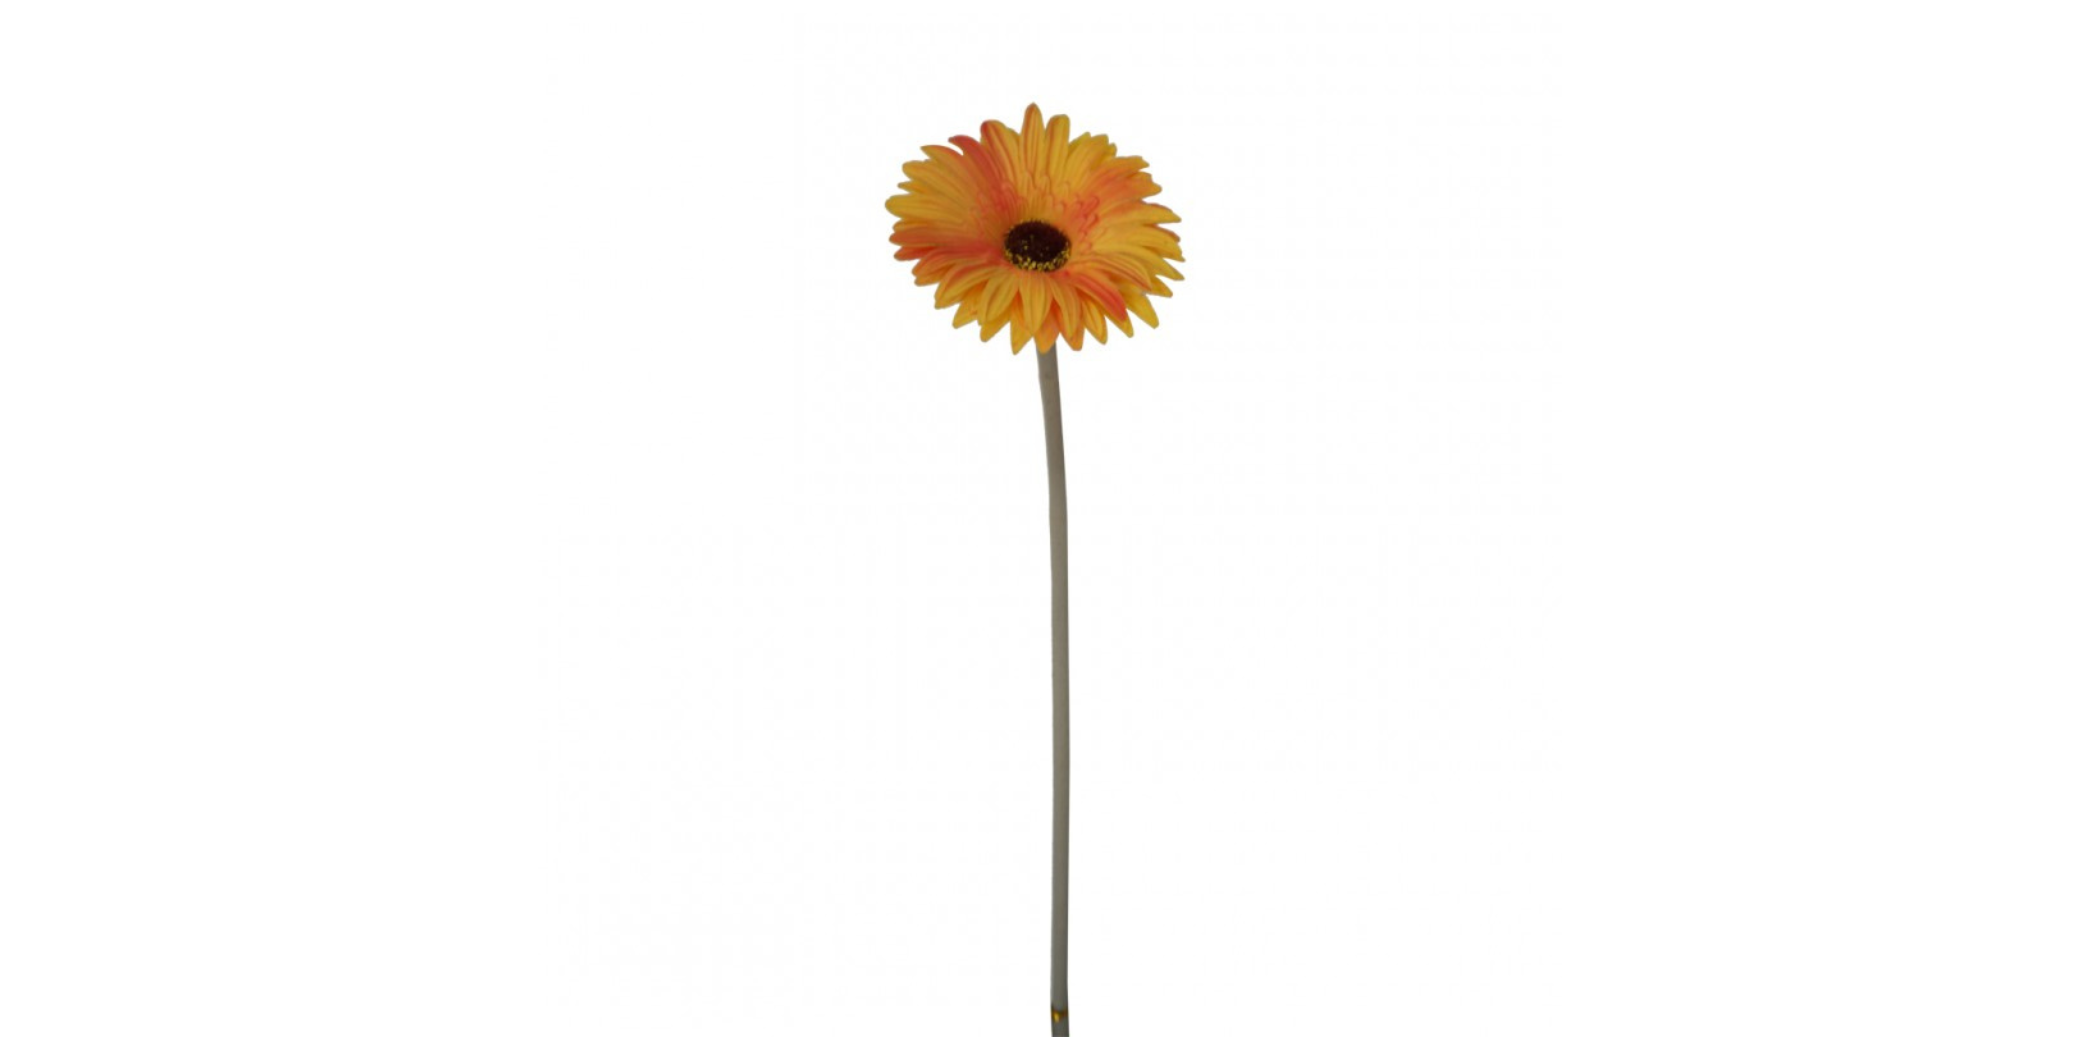 Flower 52 cm yellow